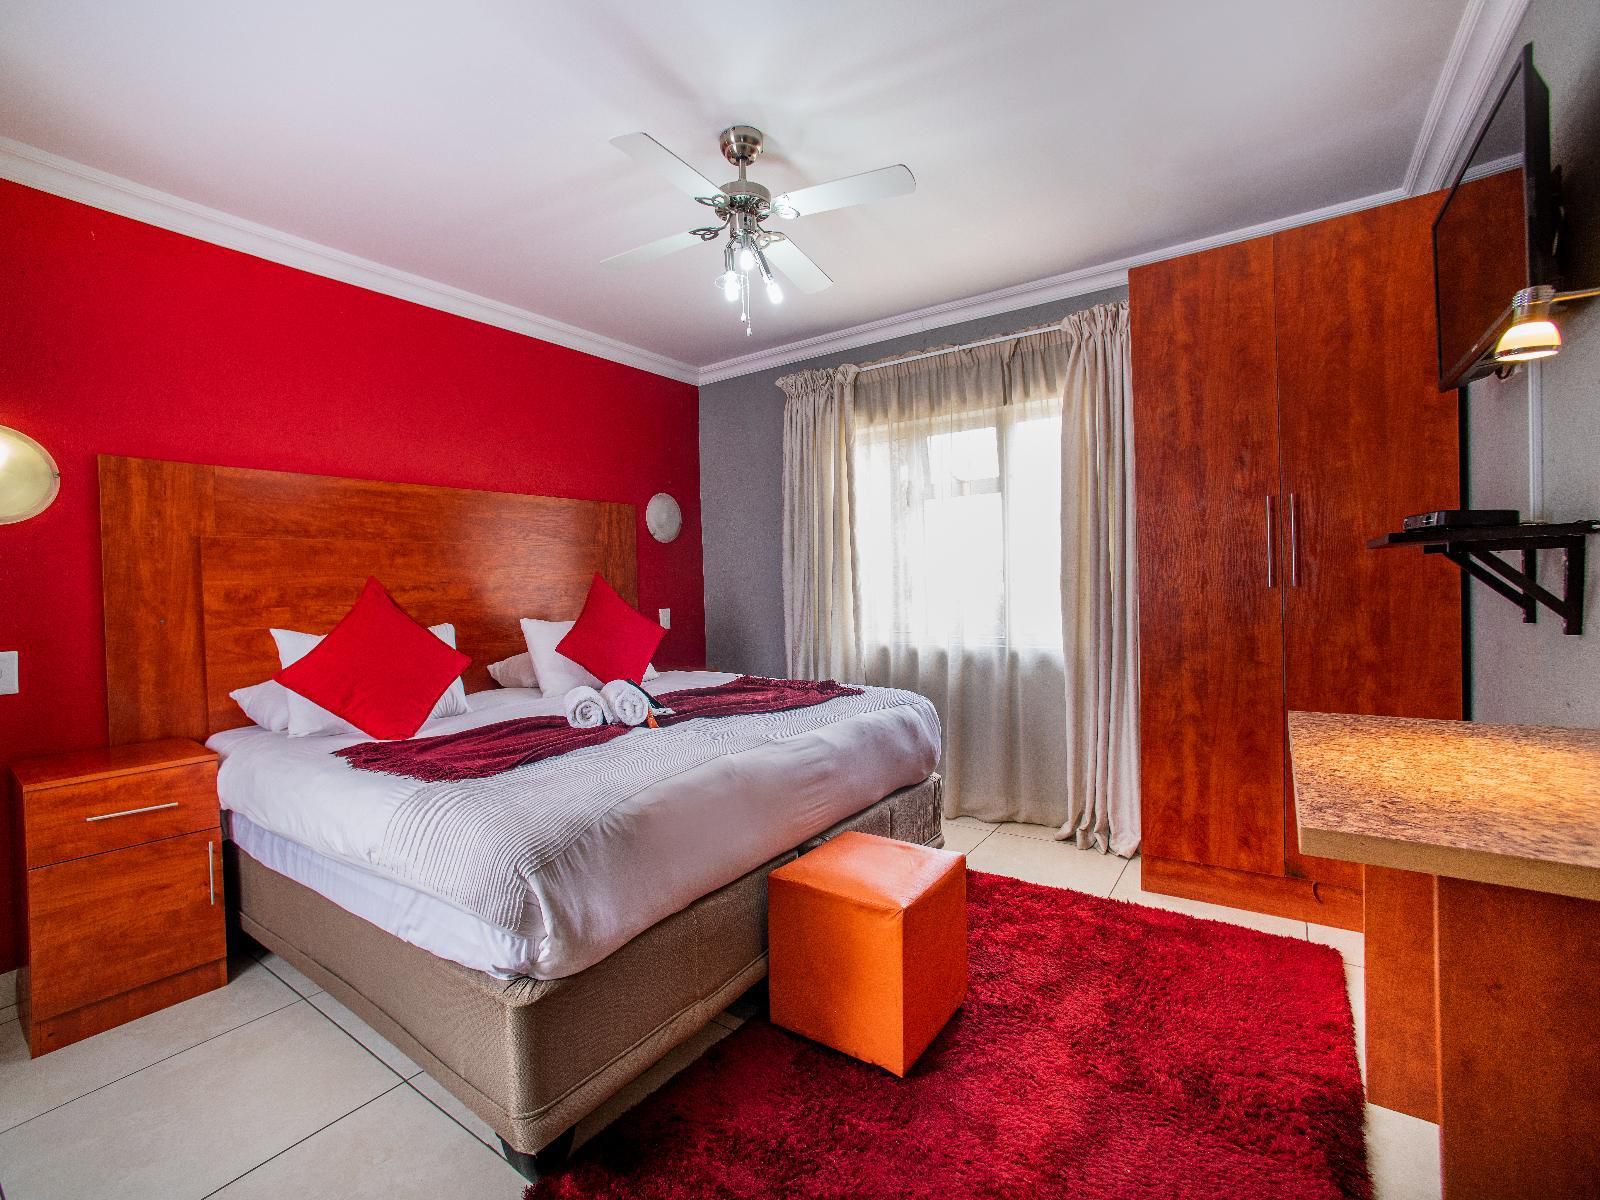 Khayalami Hotels Ermelo Ermelo Mpumalanga South Africa Bedroom